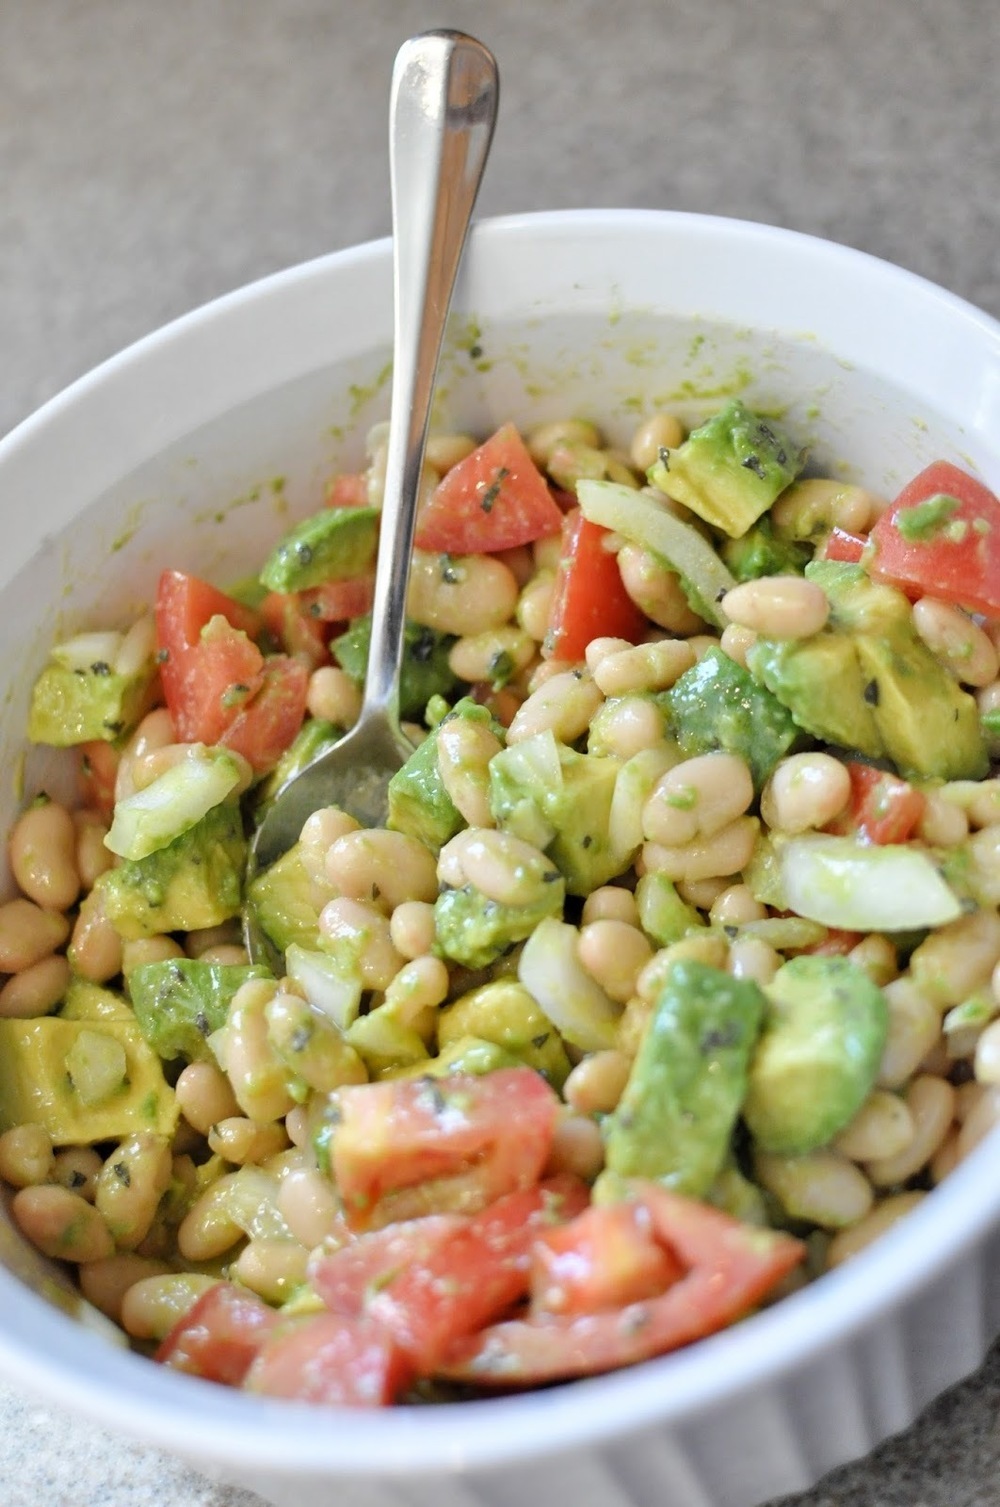 Avocado & White Bean Salad with Vinaigrette of BarboraBH - Recipefy